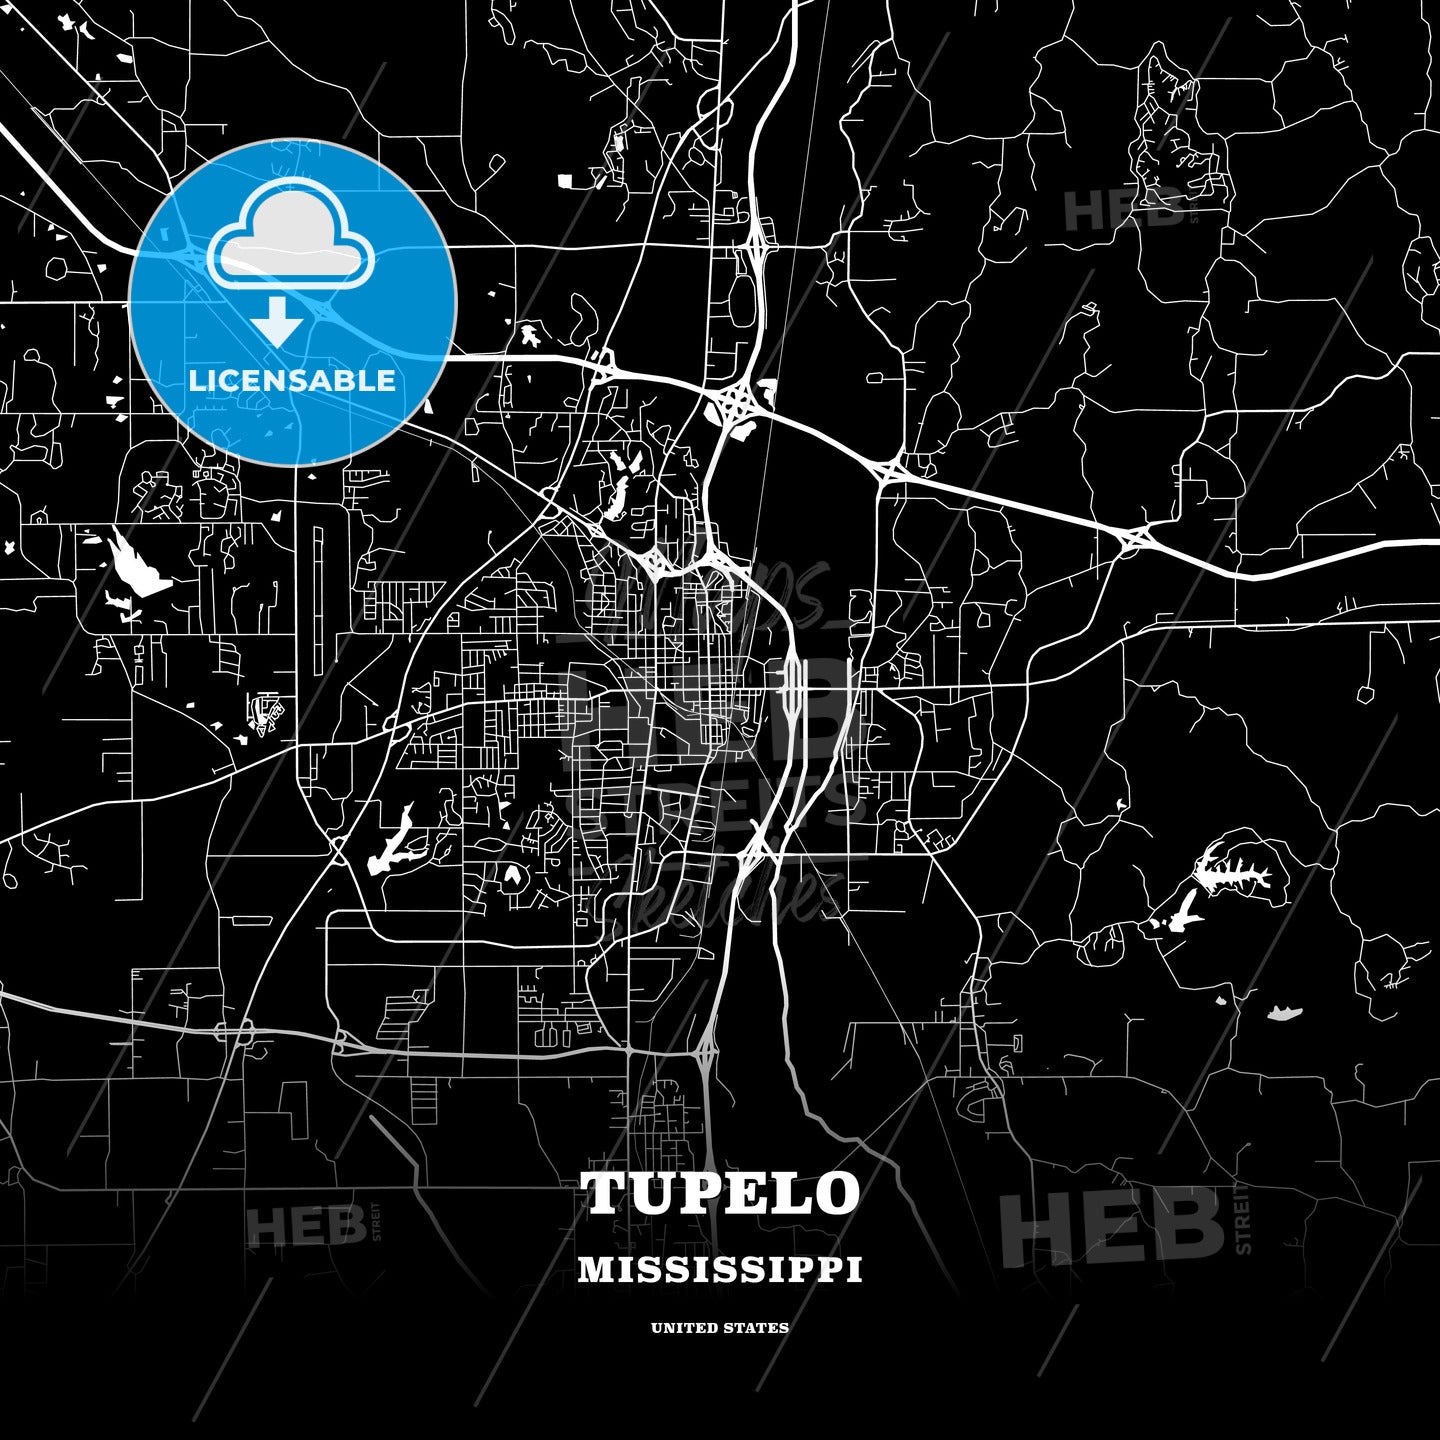 Tupelo, Mississippi, USA map